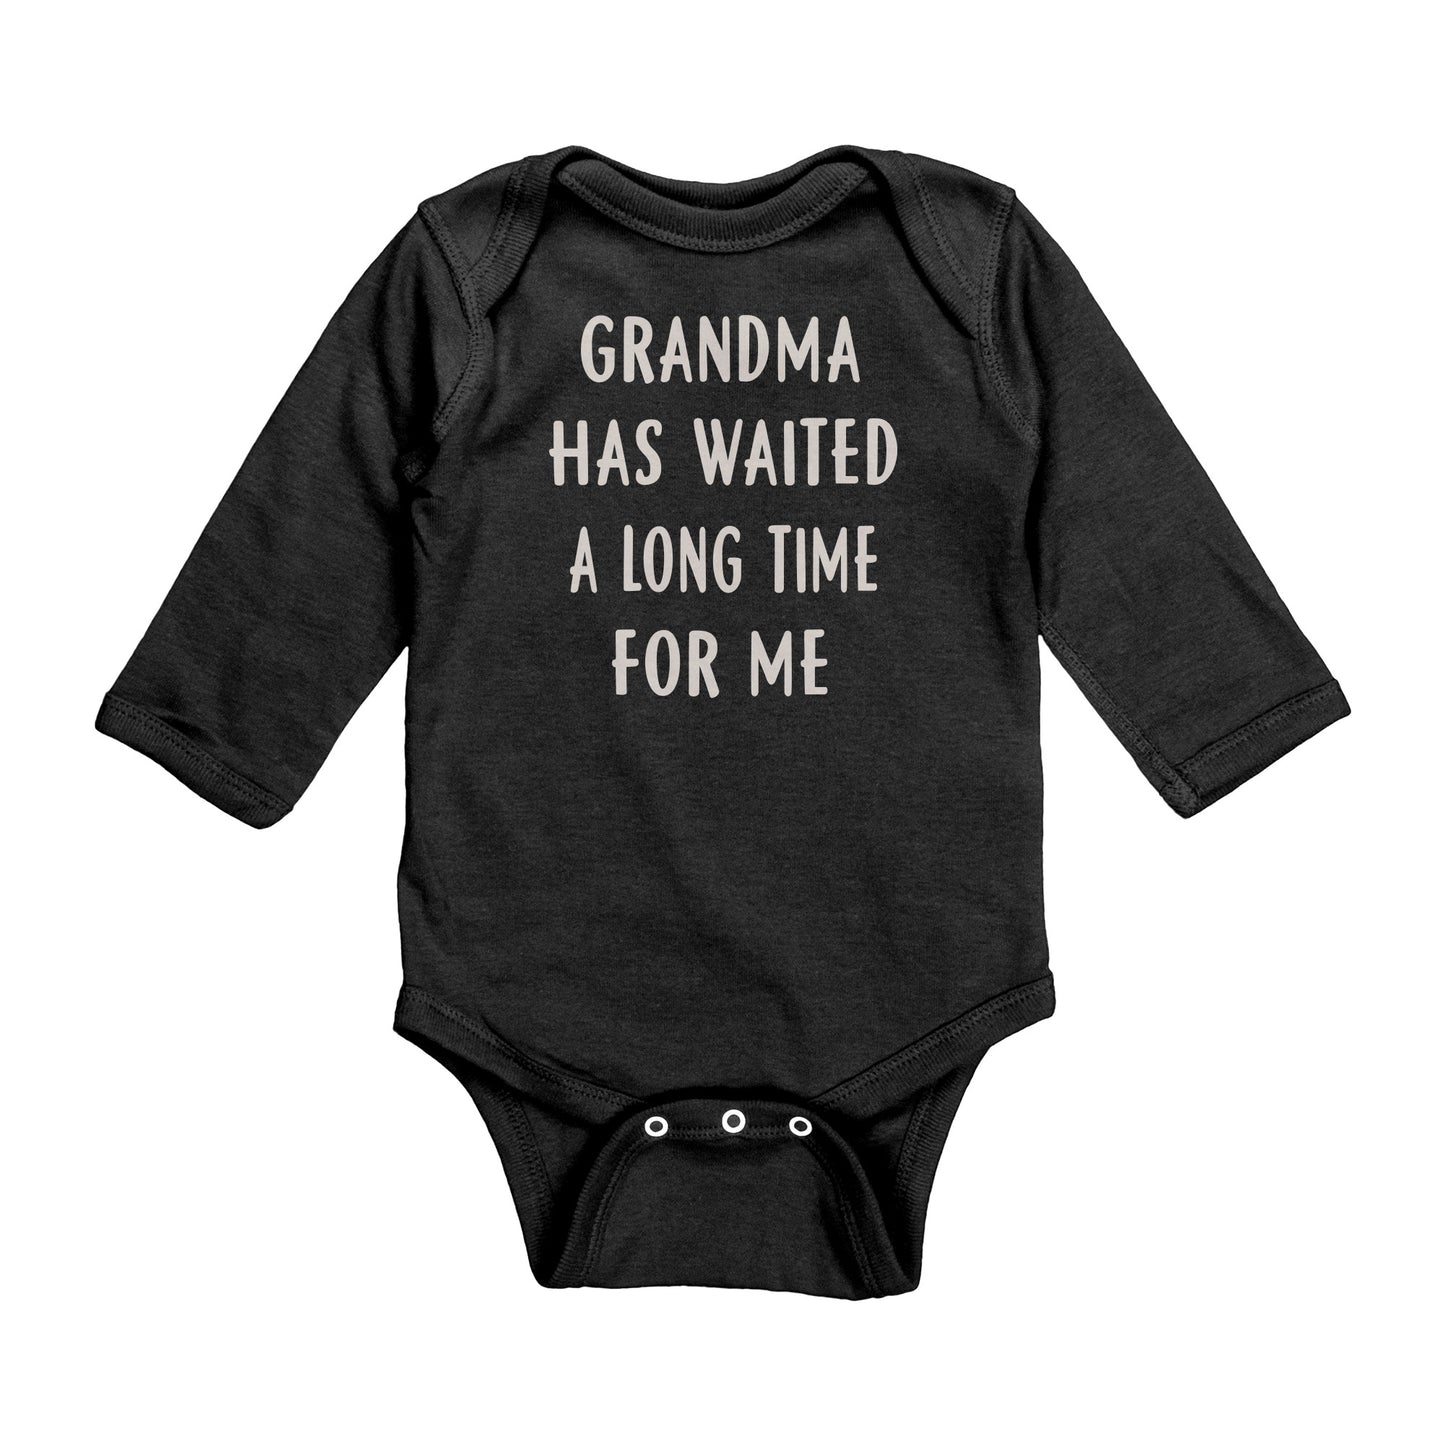 Grandma Has Waited - Funny Infant Bodysuits